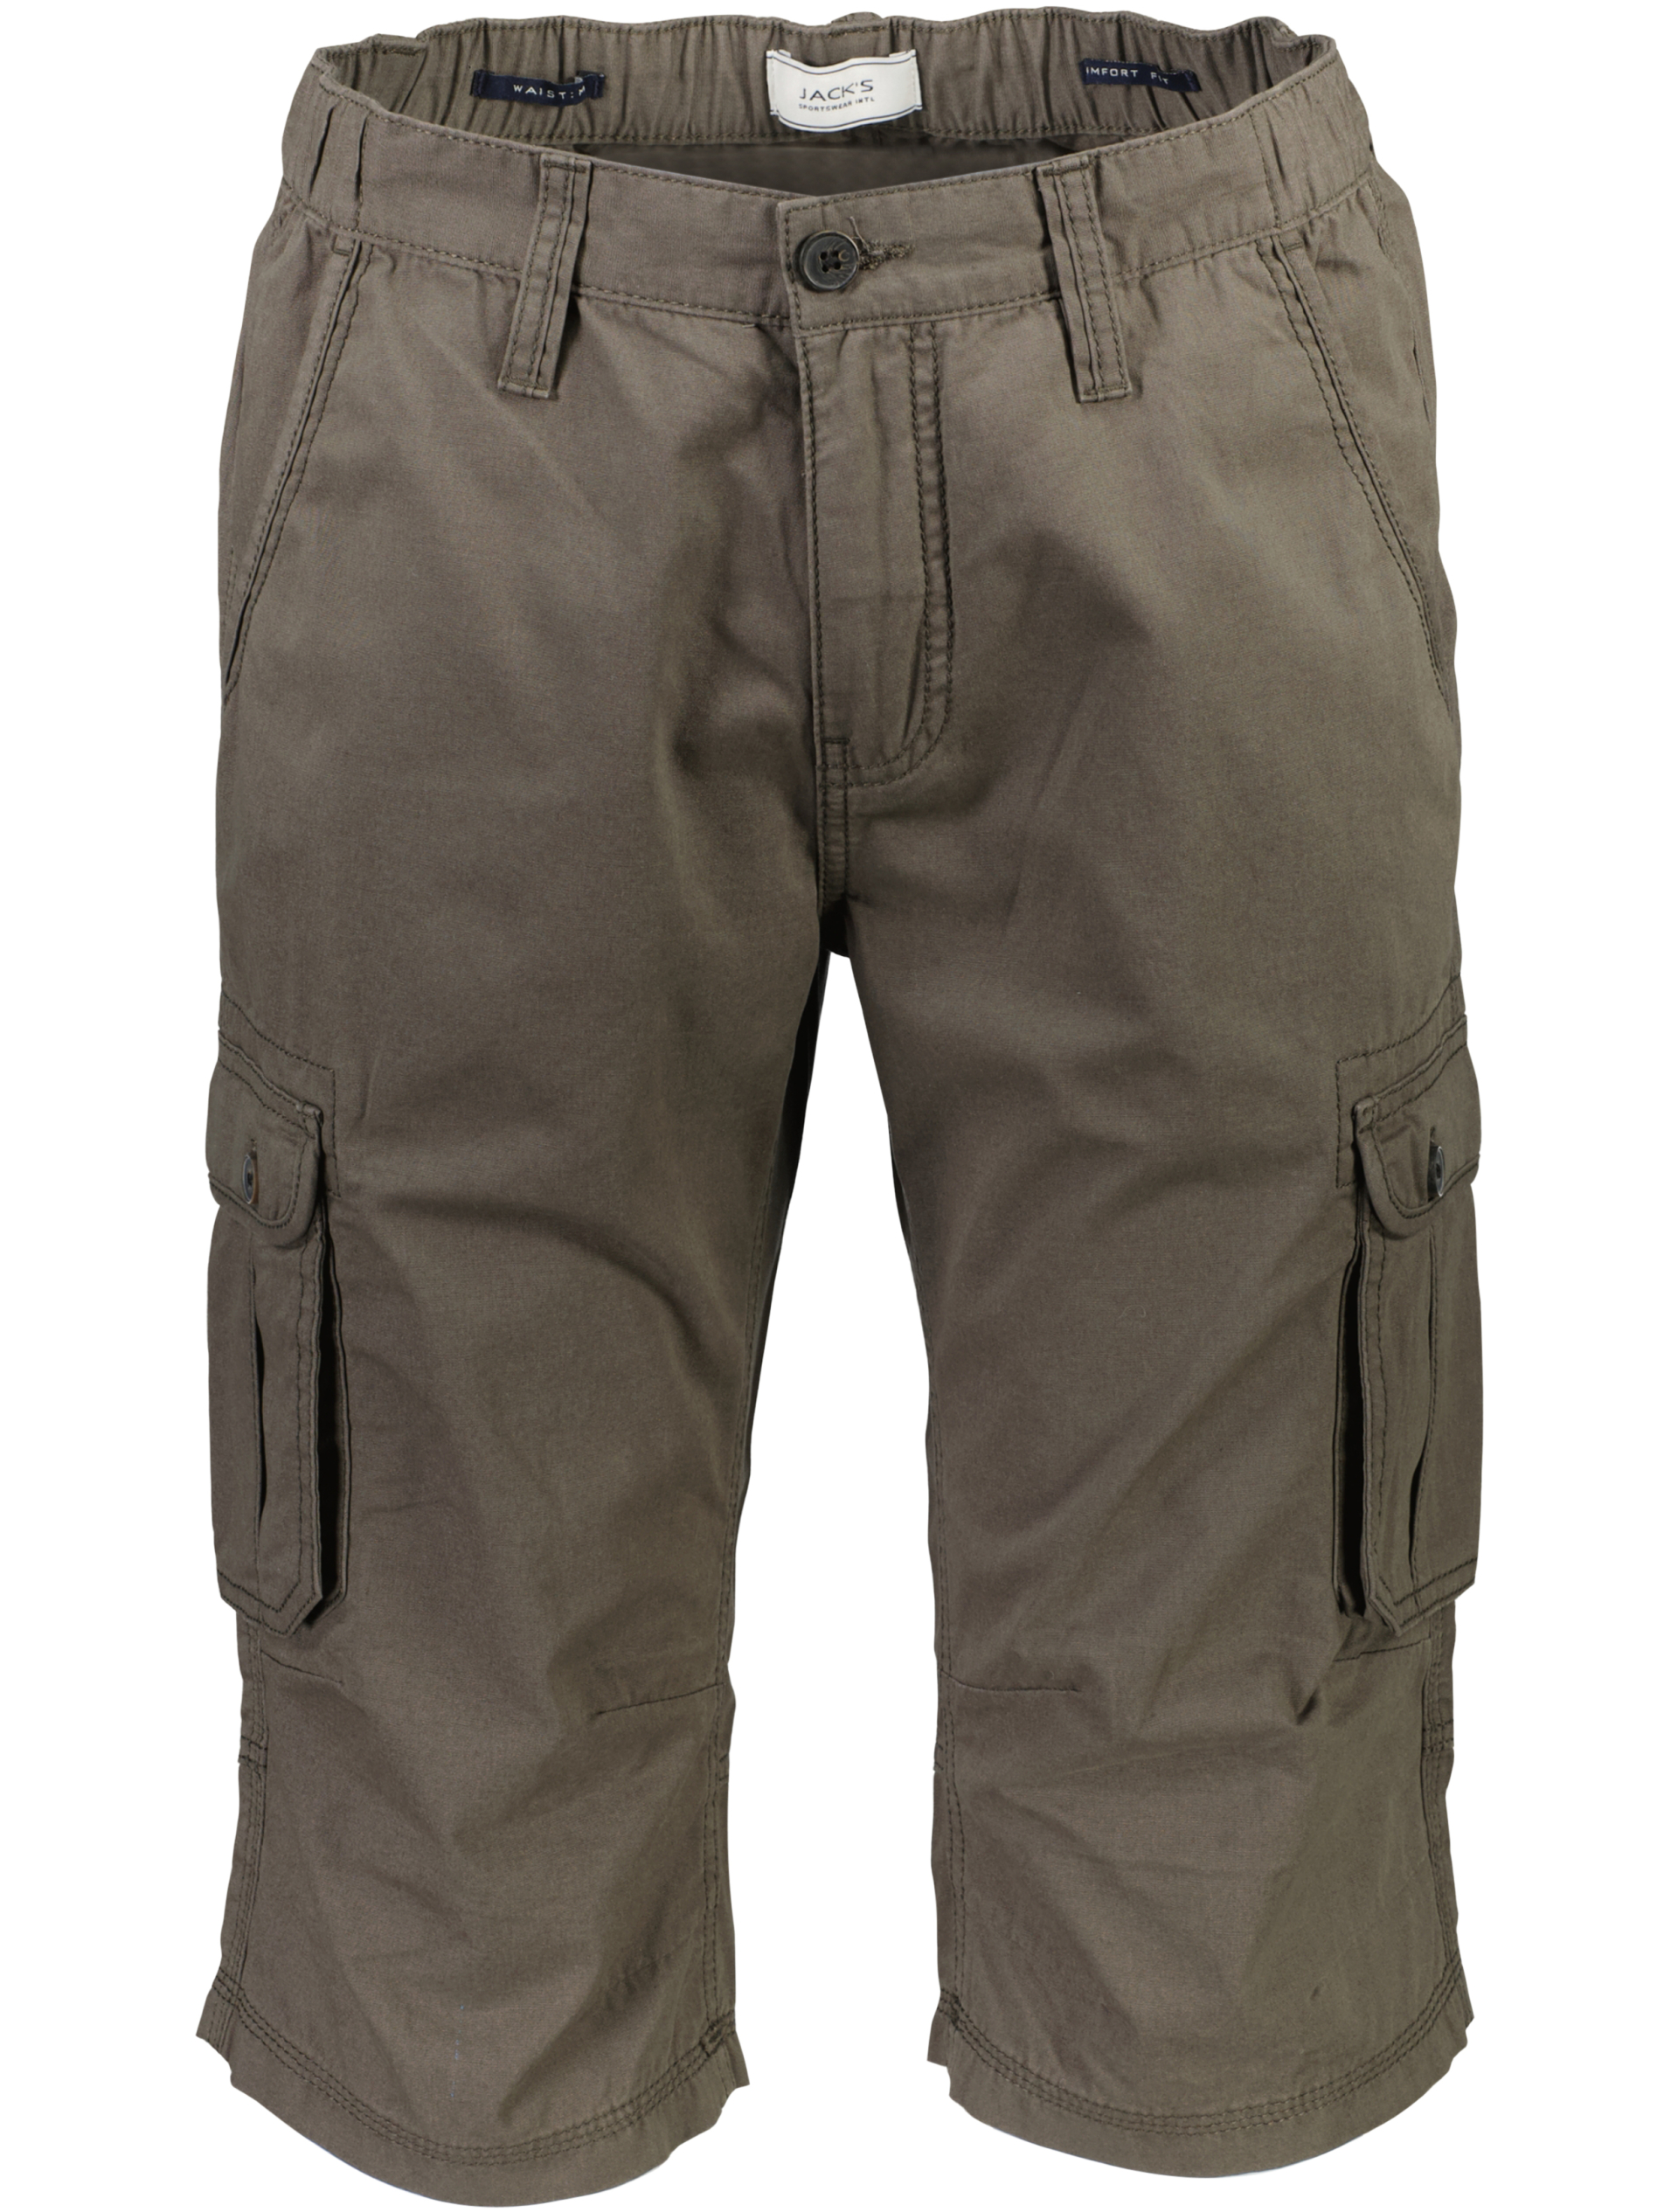 Jack's Cargo shorts grön / dk army